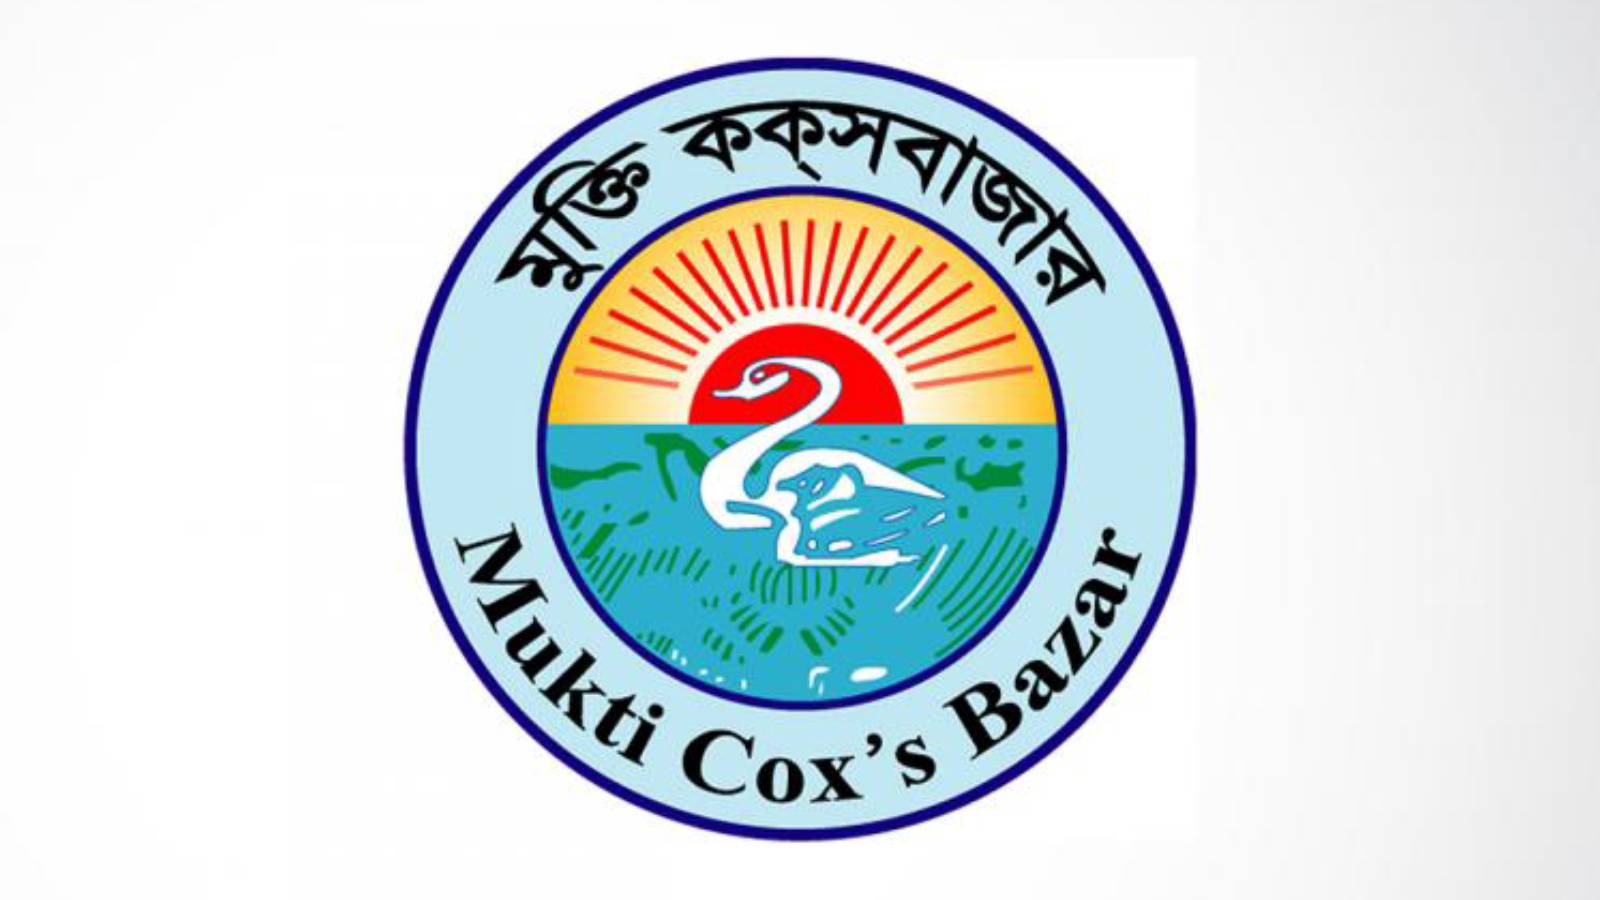 Mukti Cox's Bazar logo